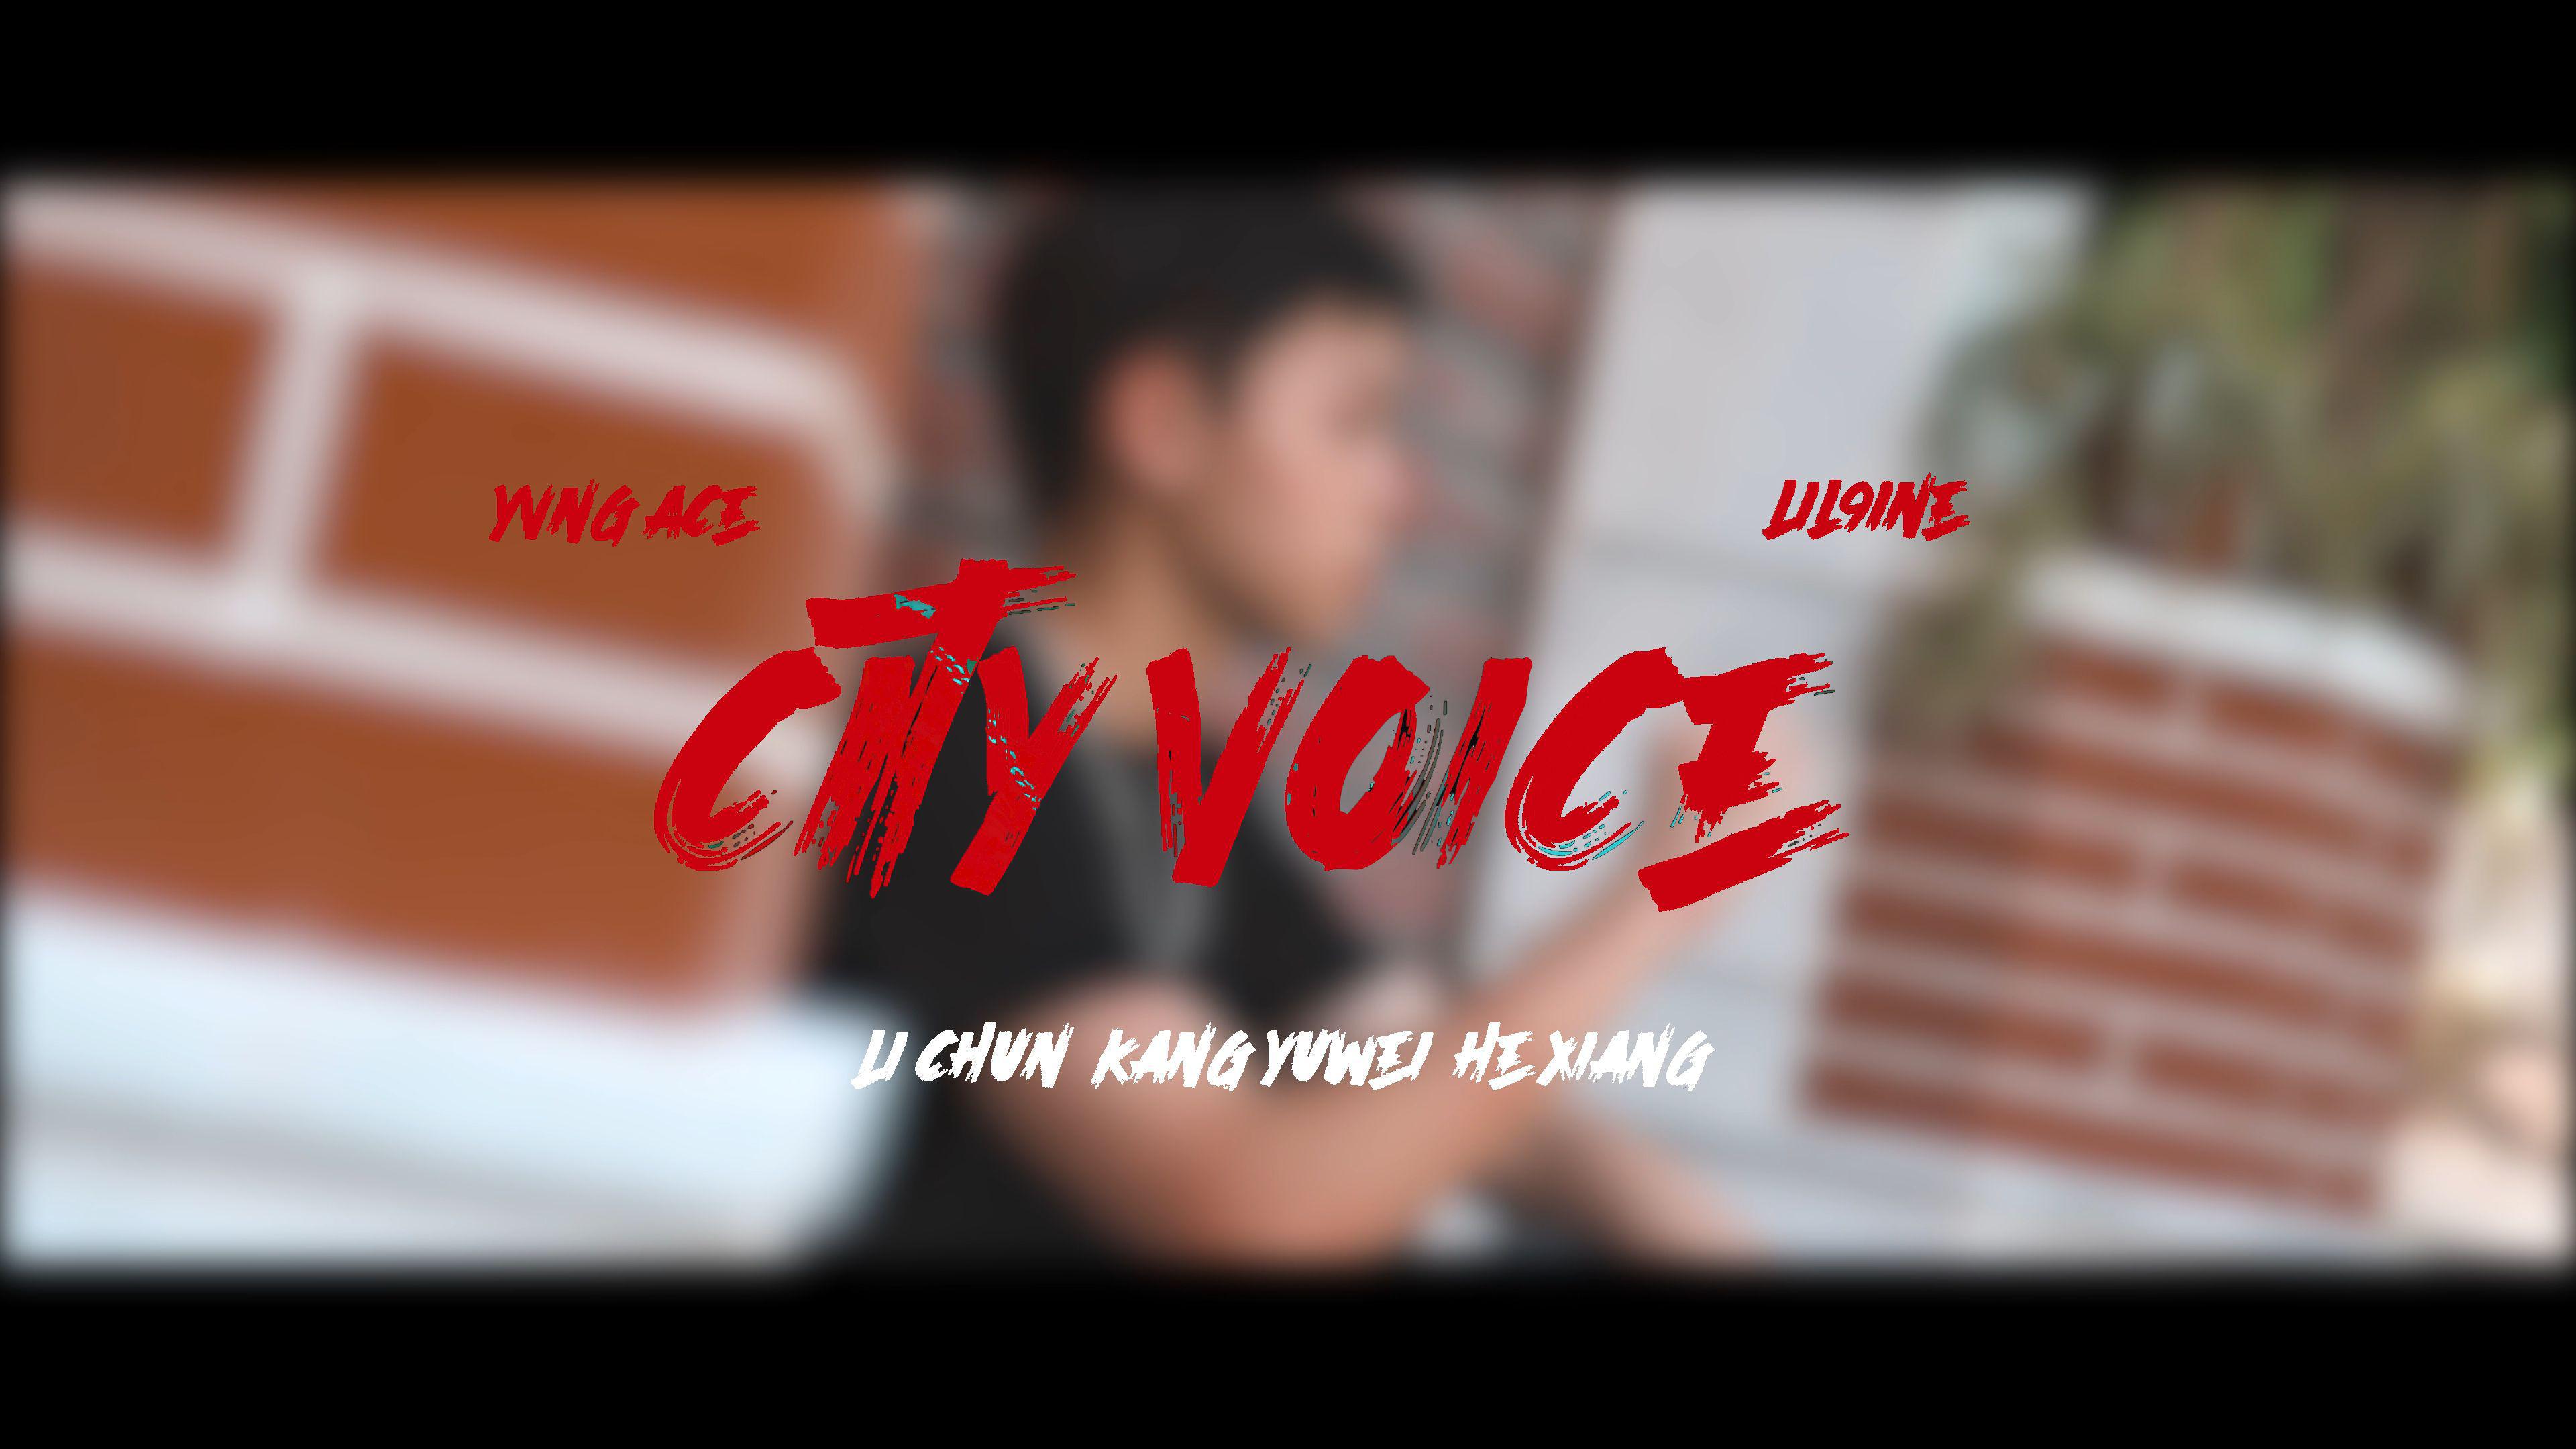 Yvng Ace - City Voice